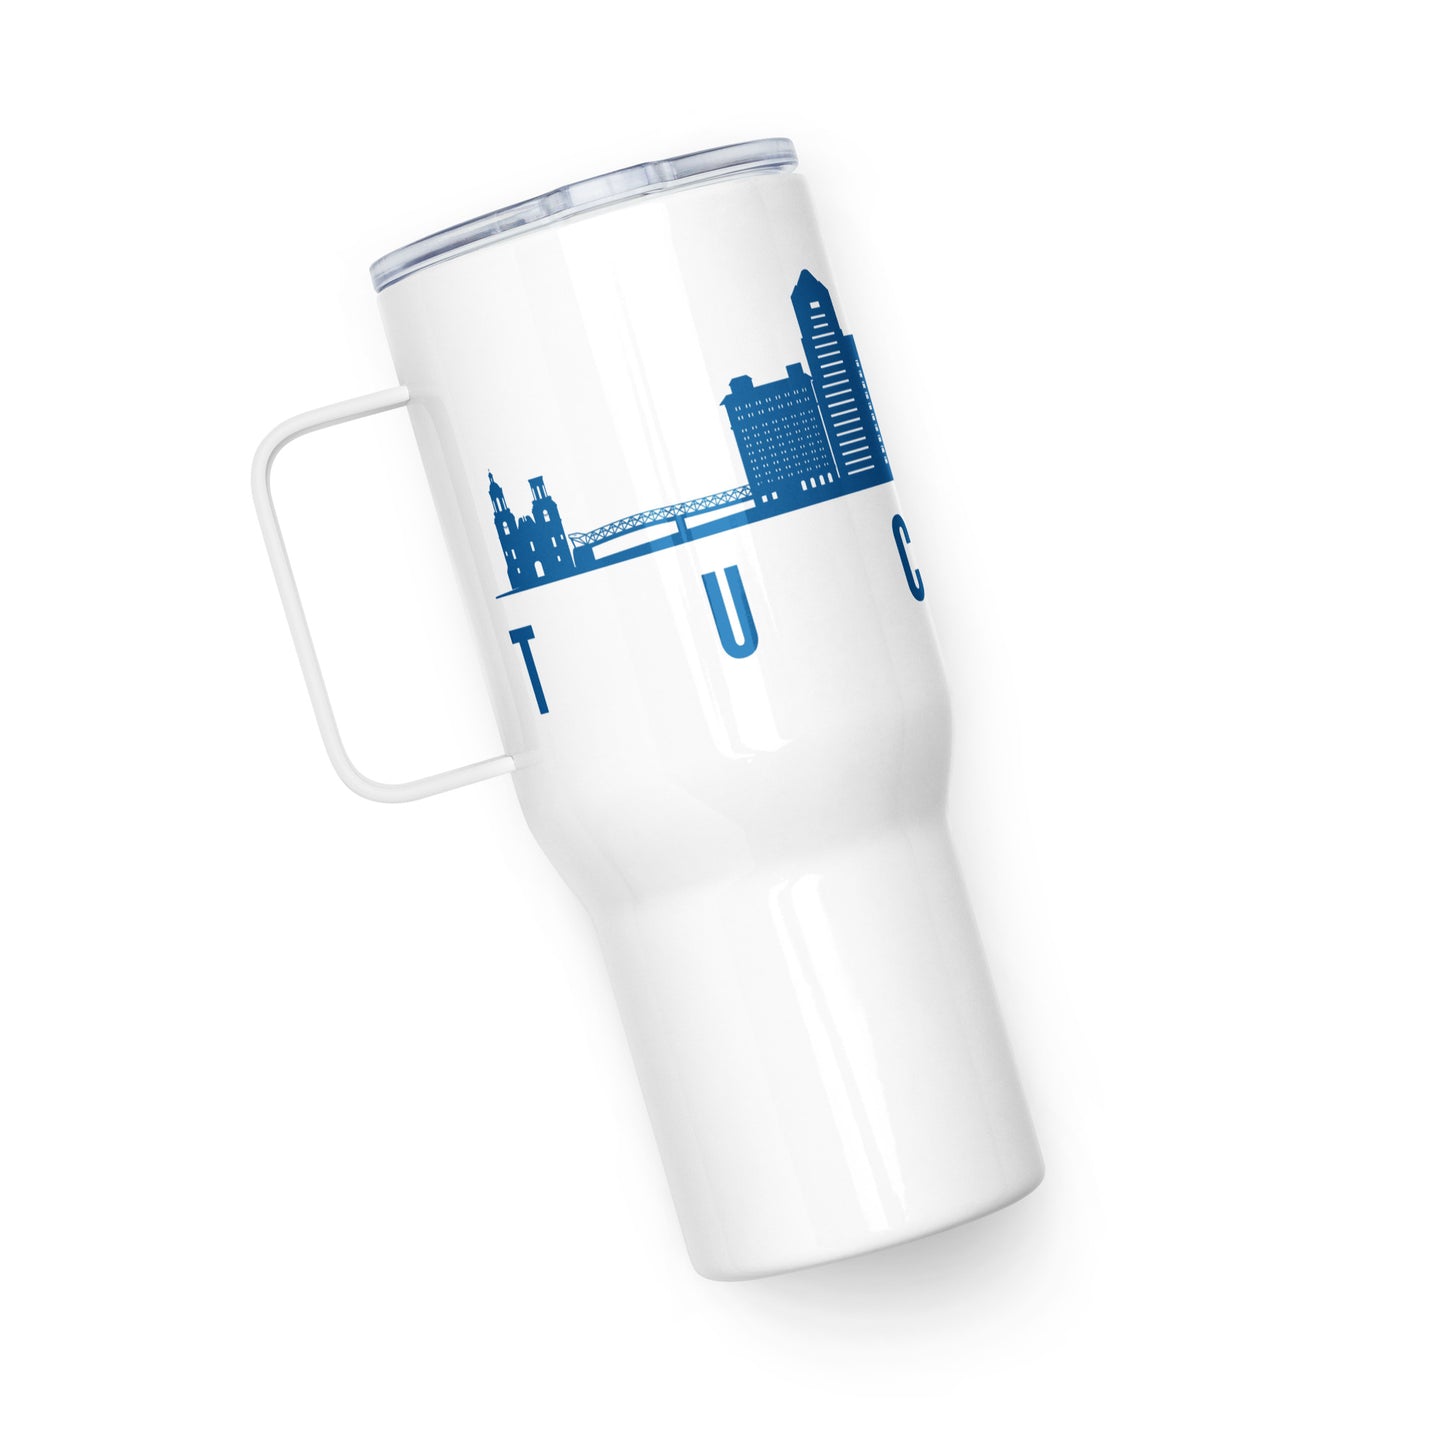 Tucson United Travel mug with a handle